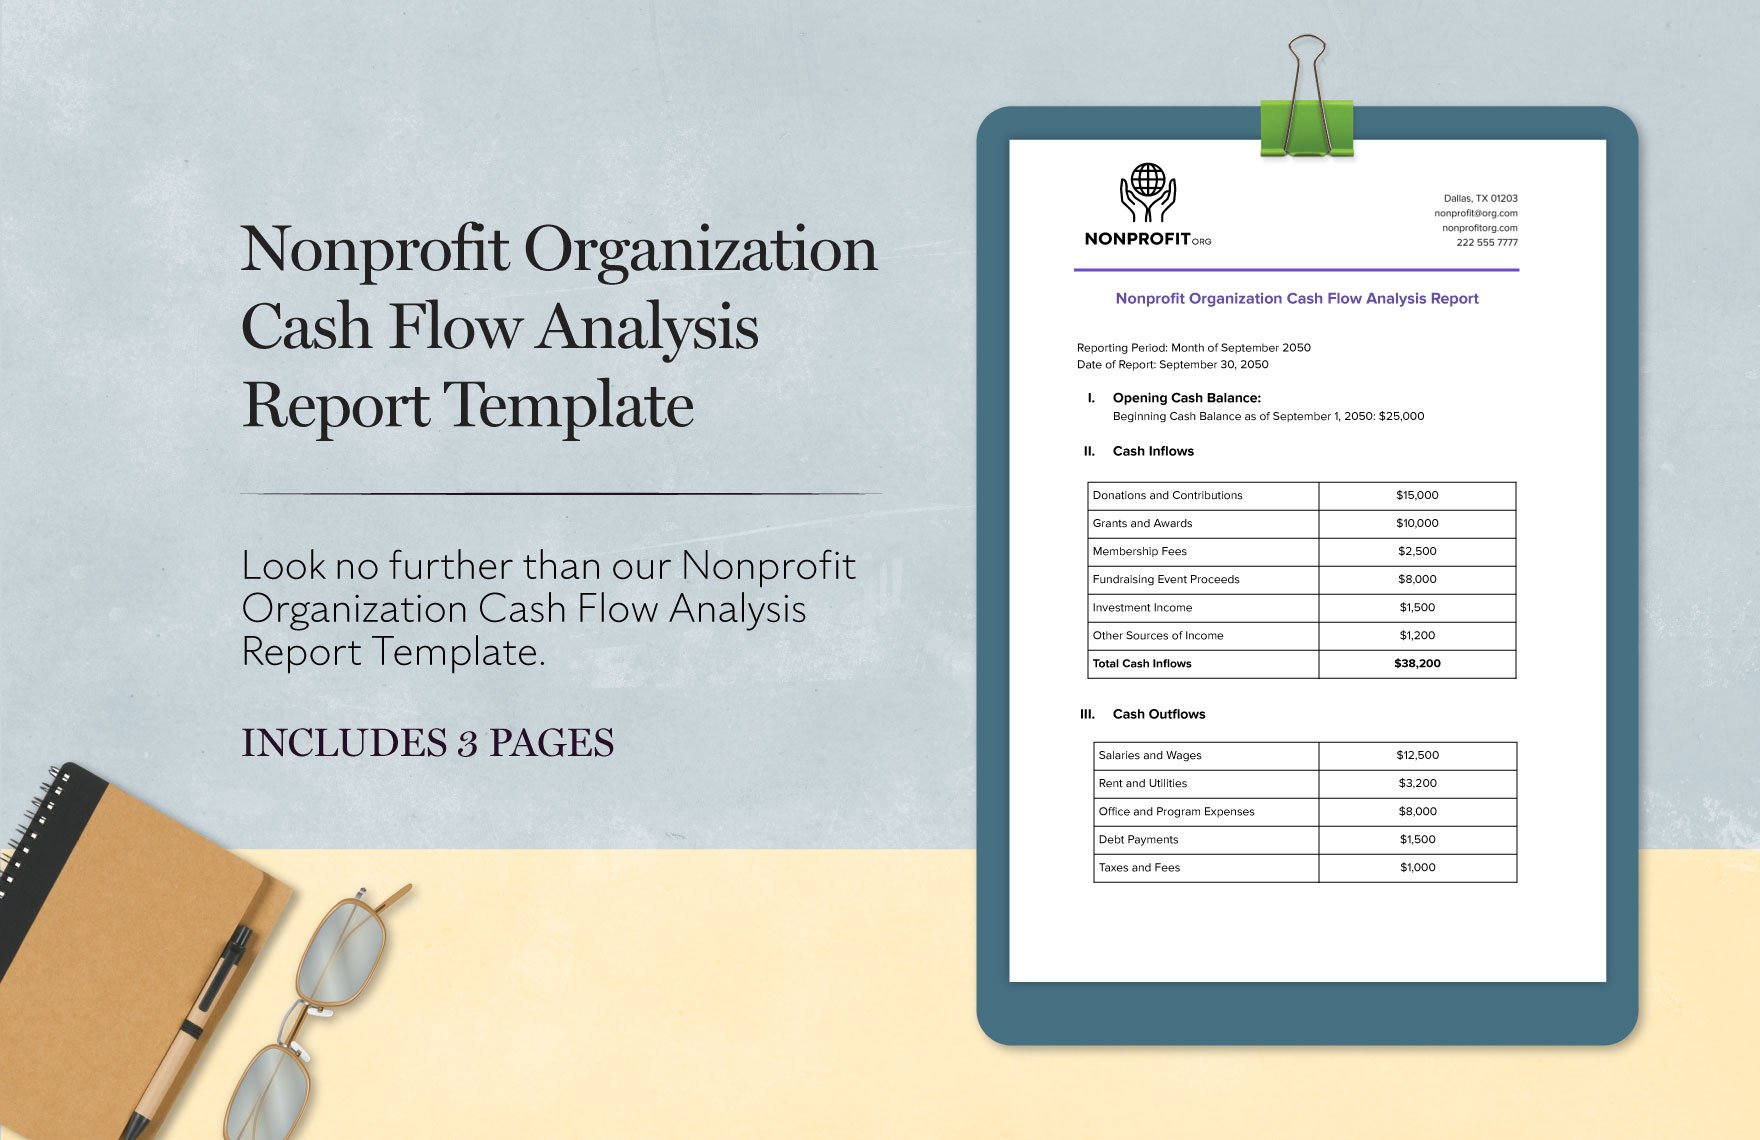 Nonprofit Organization Cash Flow Analysis Report Template in Word, Google Docs, PDF